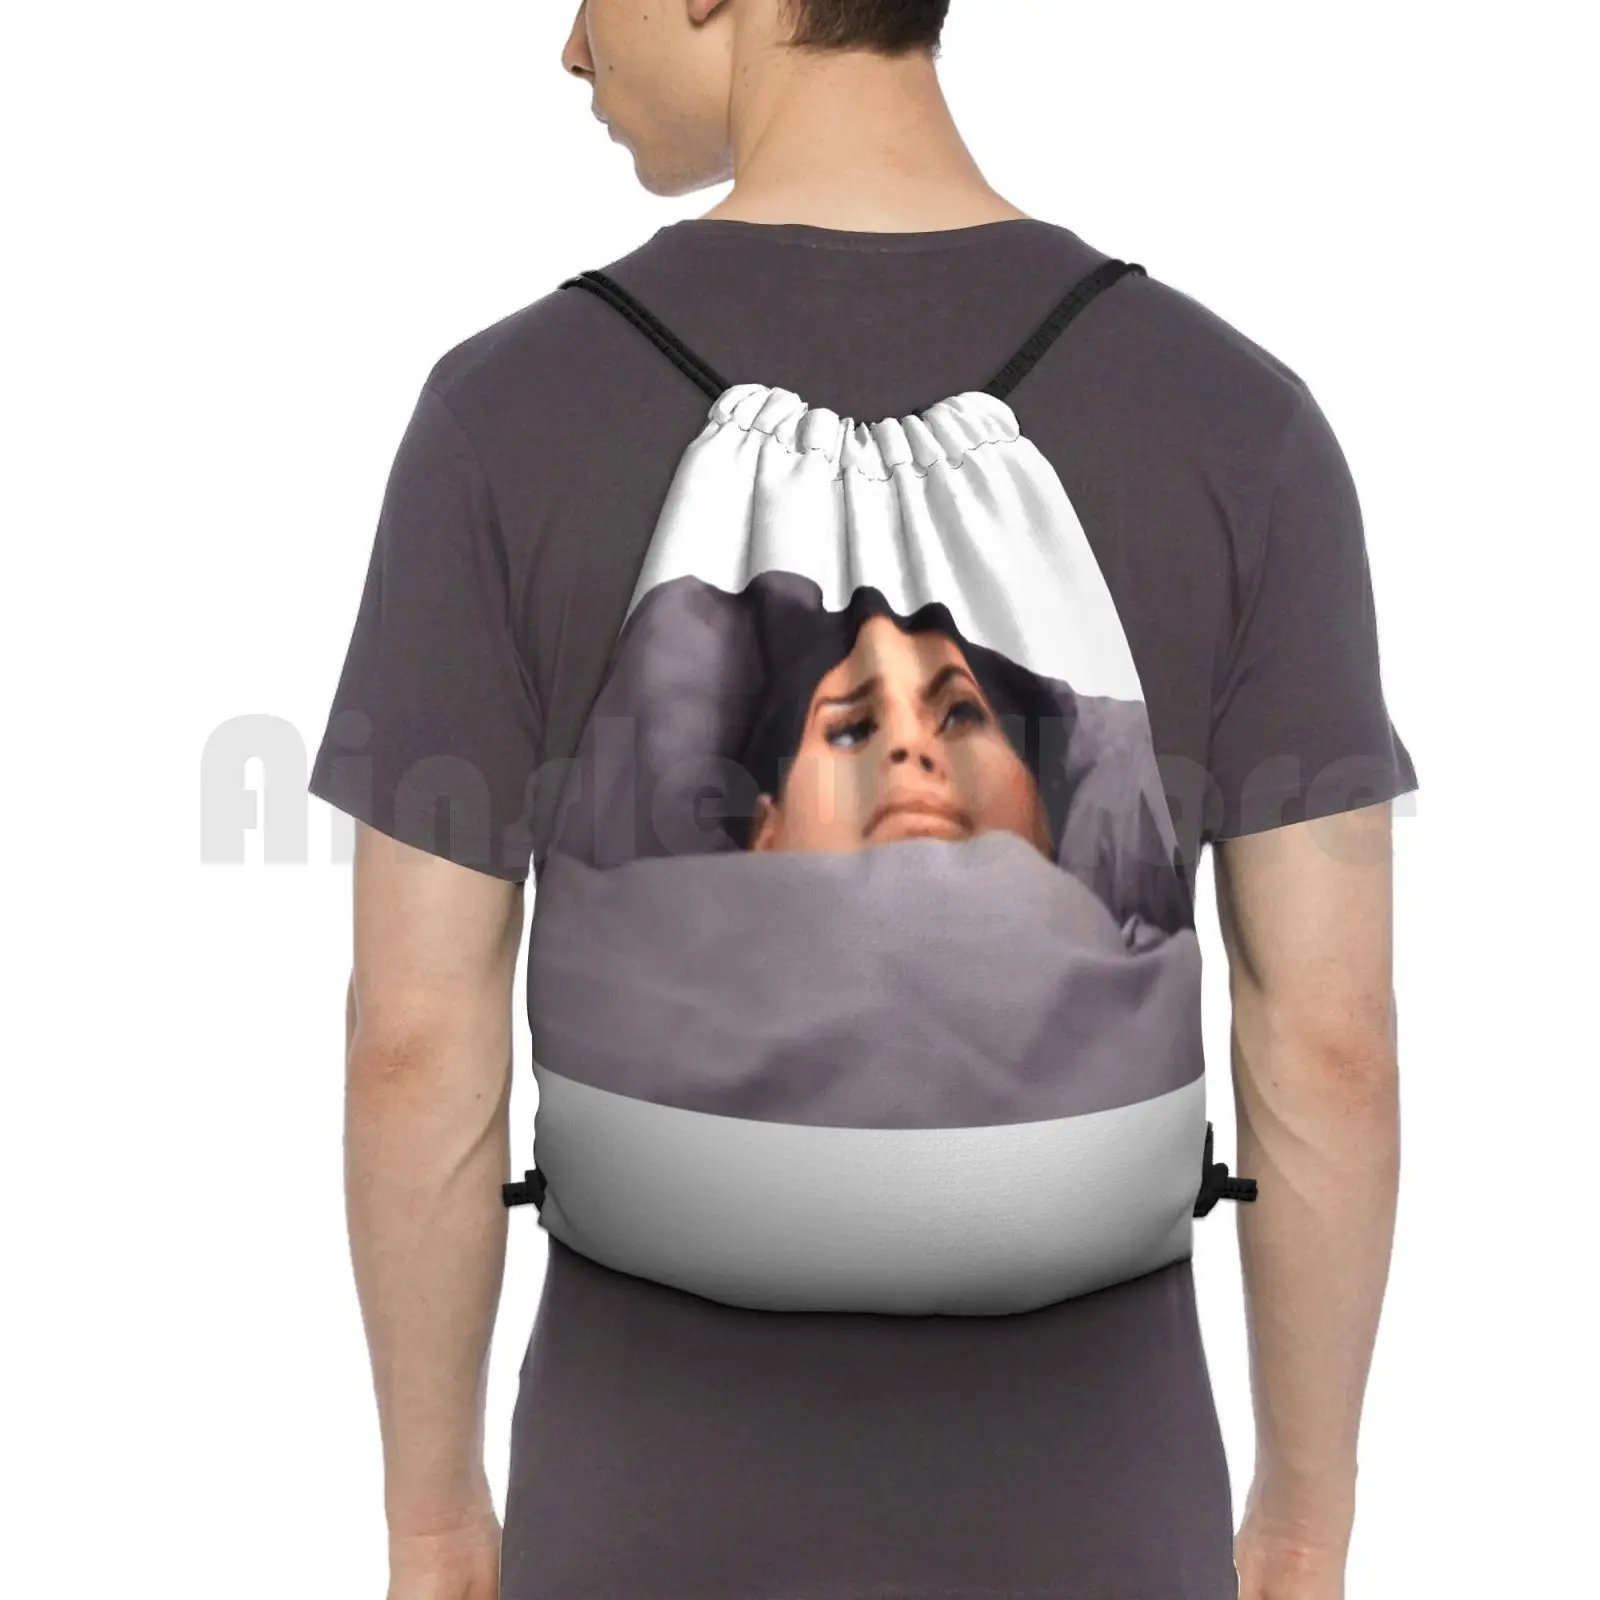 

Backpack Drawstring Bag Riding Climbing Gym Bag Kris Jenner Funny Meme Cute Tumblr Hipster Nerd Geek Humor Cool Popular